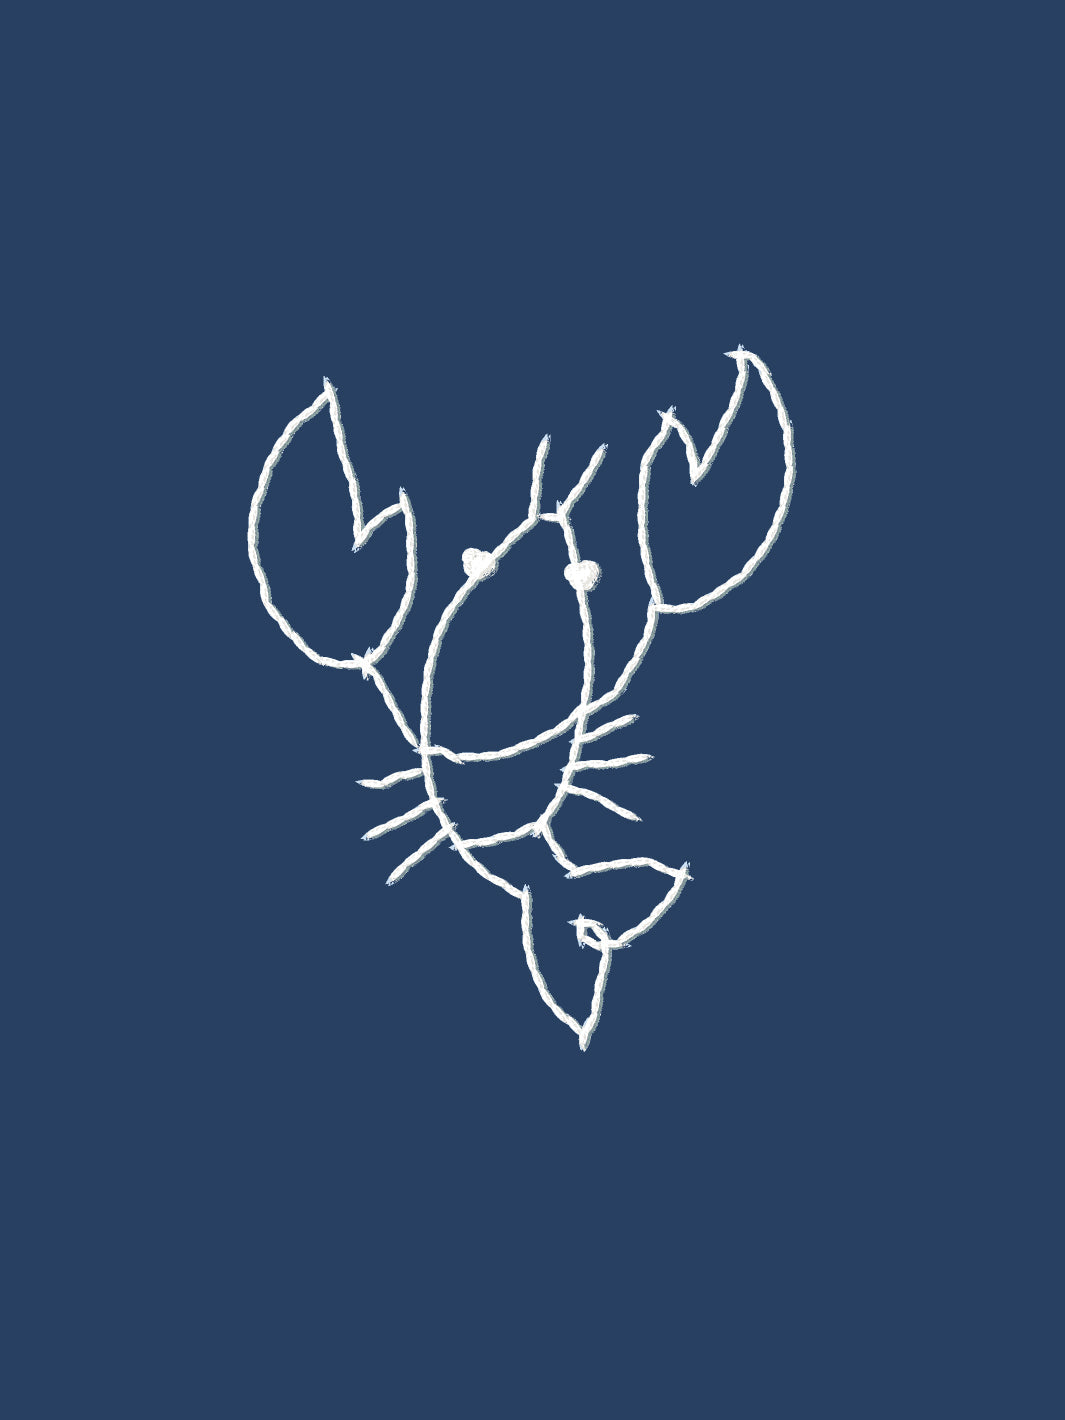 'Lobsters' Wallpaper by Lingua Franca - Navy